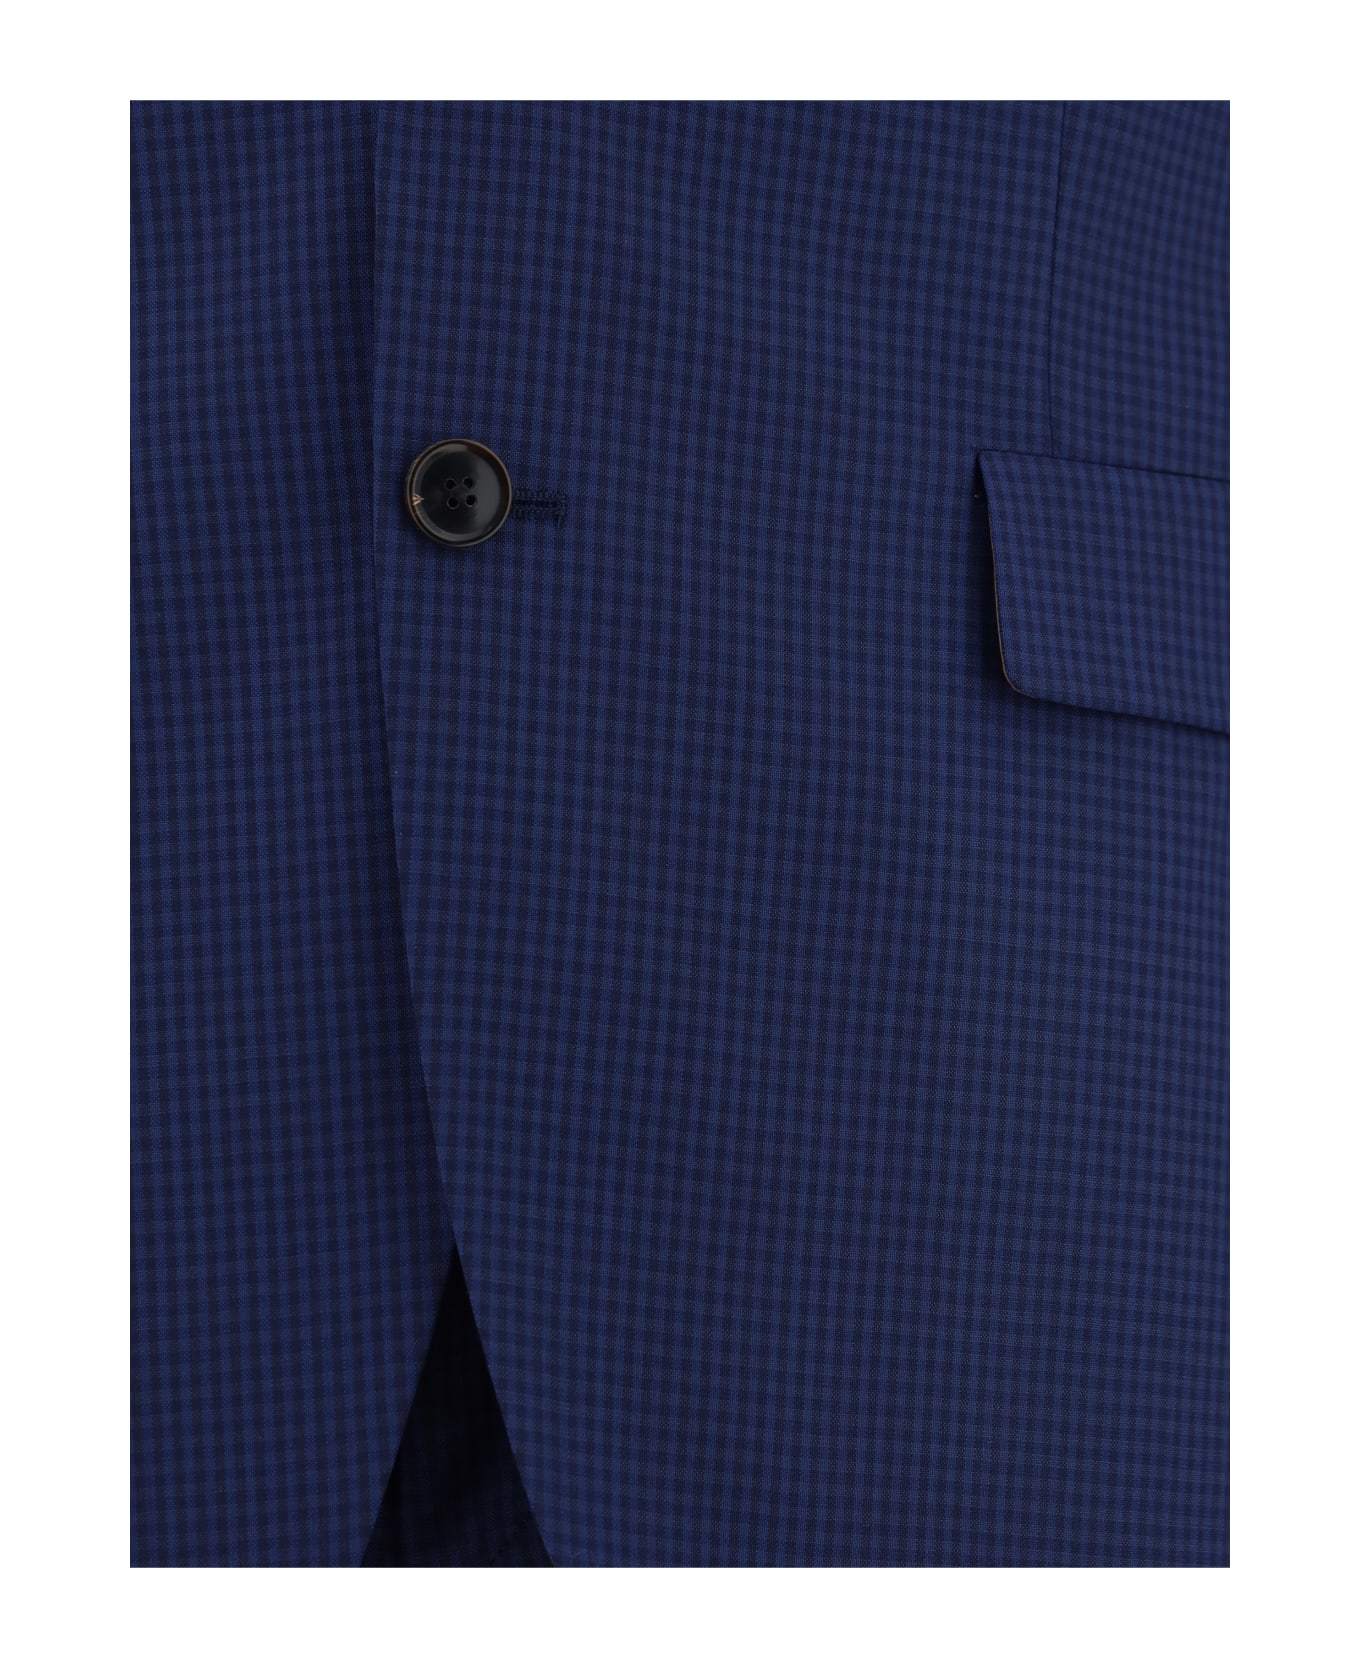 Paul Smith Suit - Blue スーツ